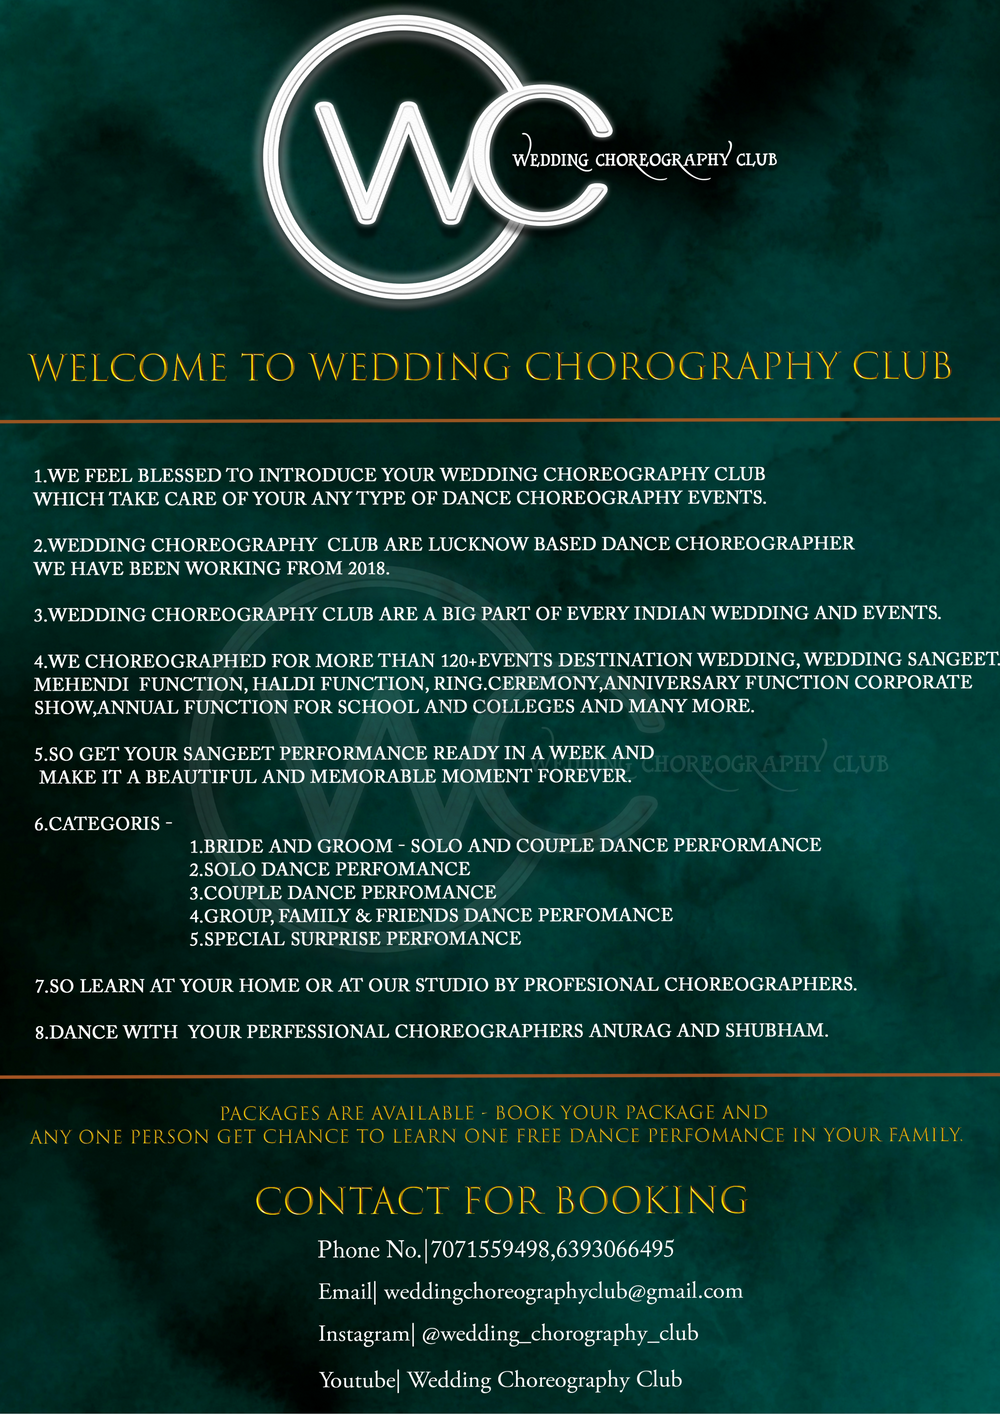 Photo From wedding choreography club details - By Wedding Choreography Club